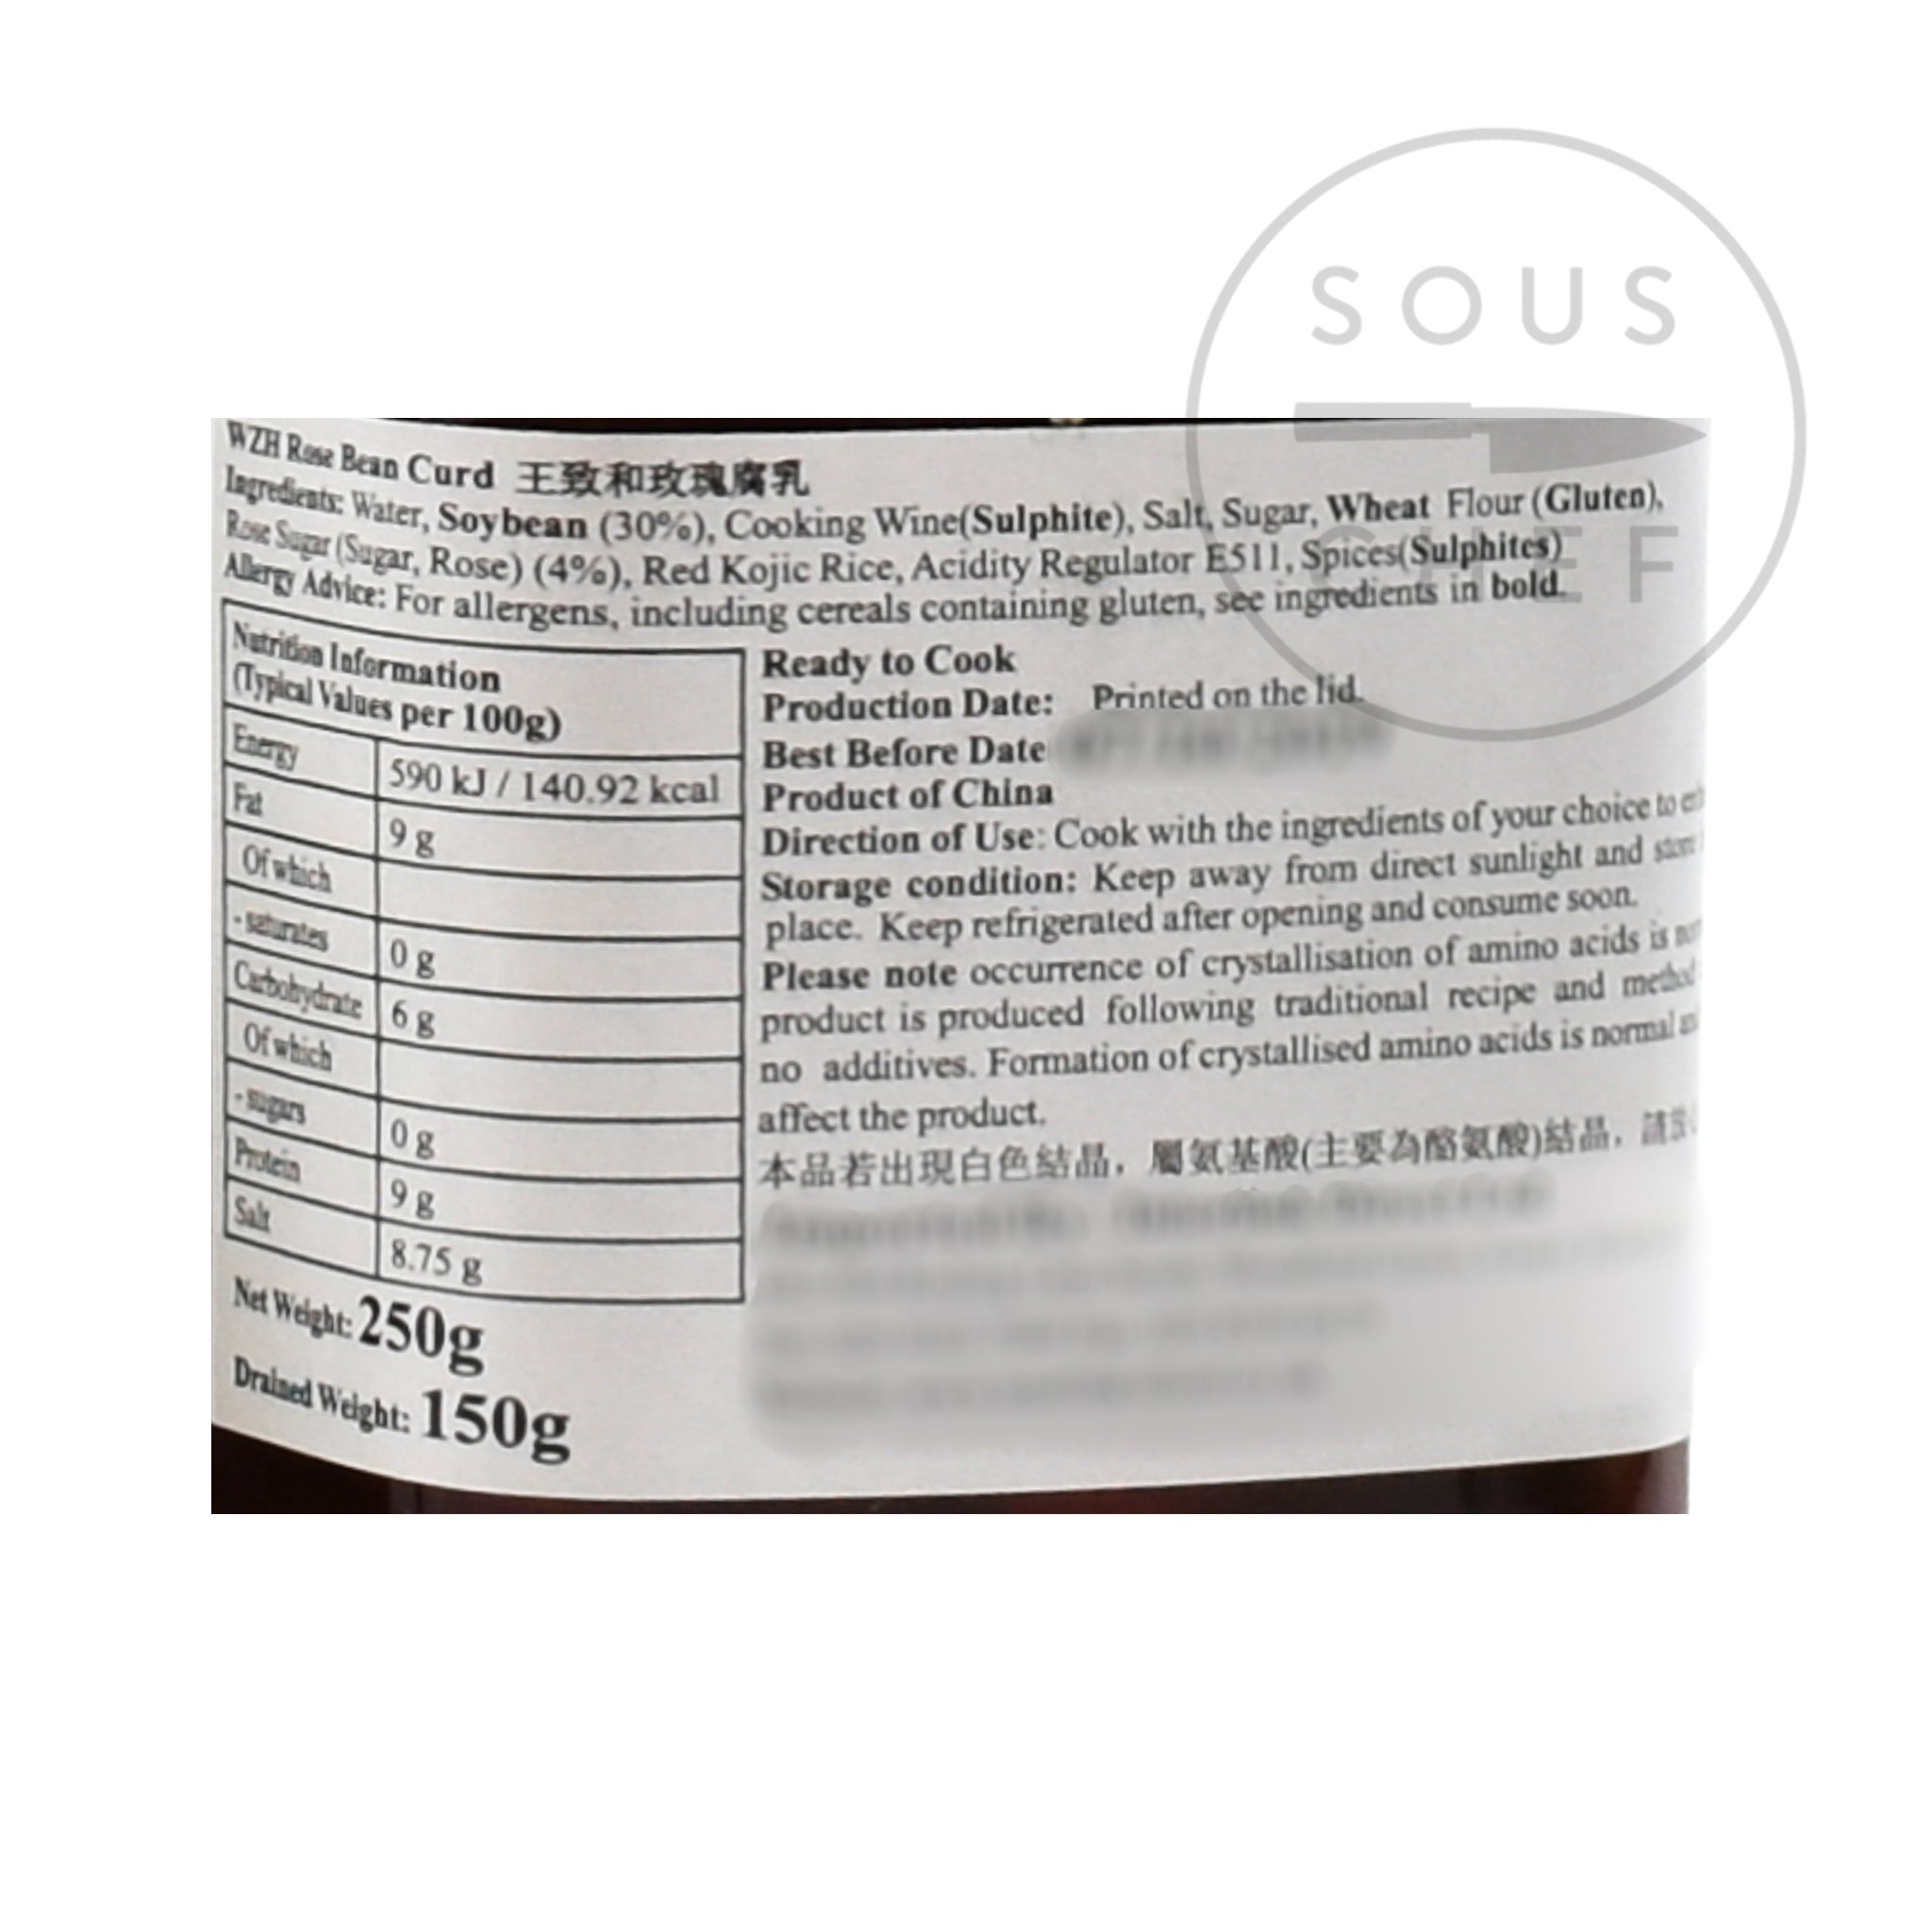 Rose Bean Curd - Preserved Red Beancurd 250g nutritional information ingredients